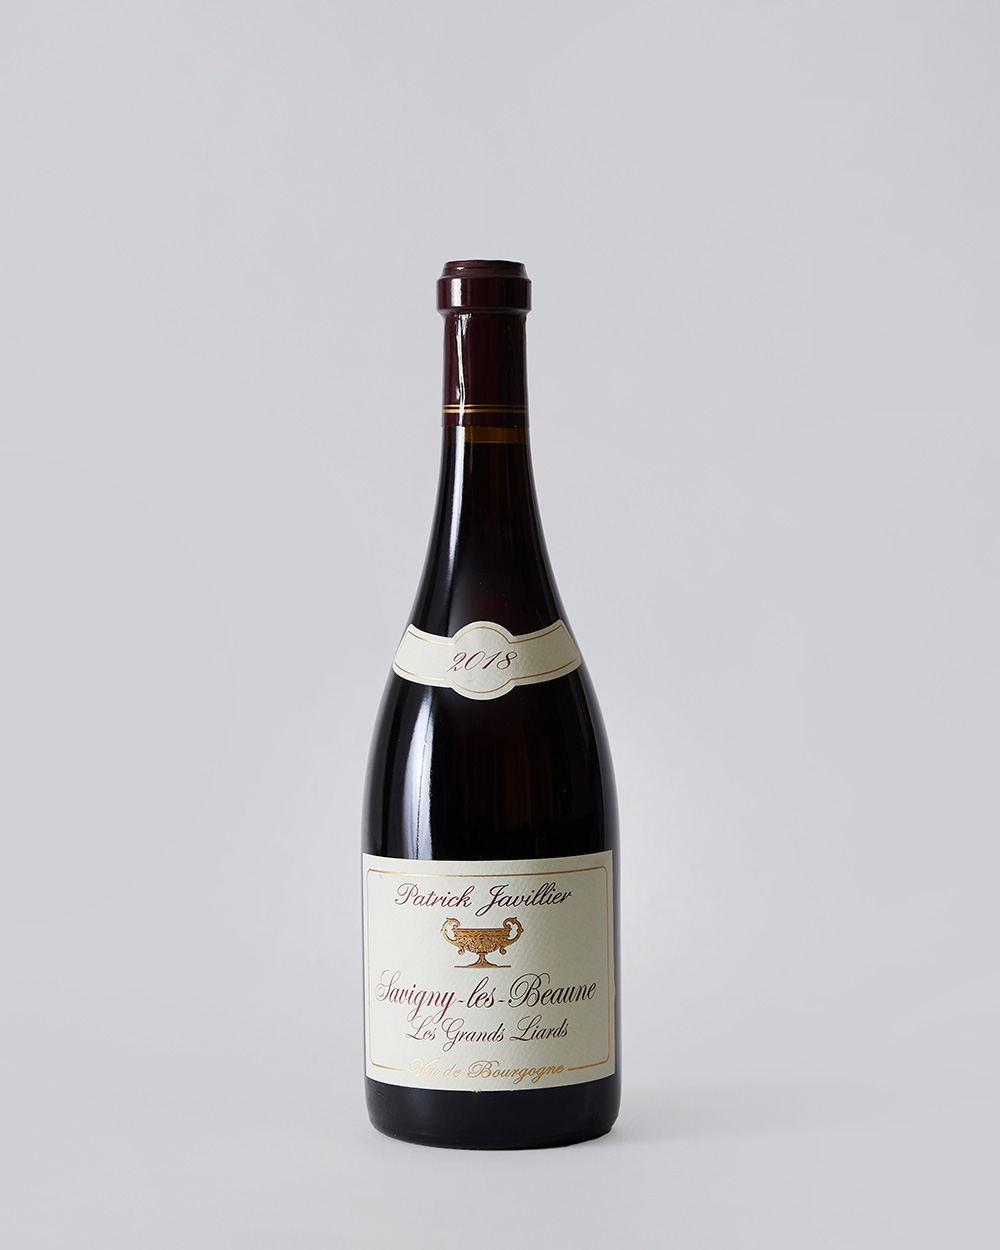 Patrick Javillier Savigny-les-Beaune Les-Grands Liards Bourgogne